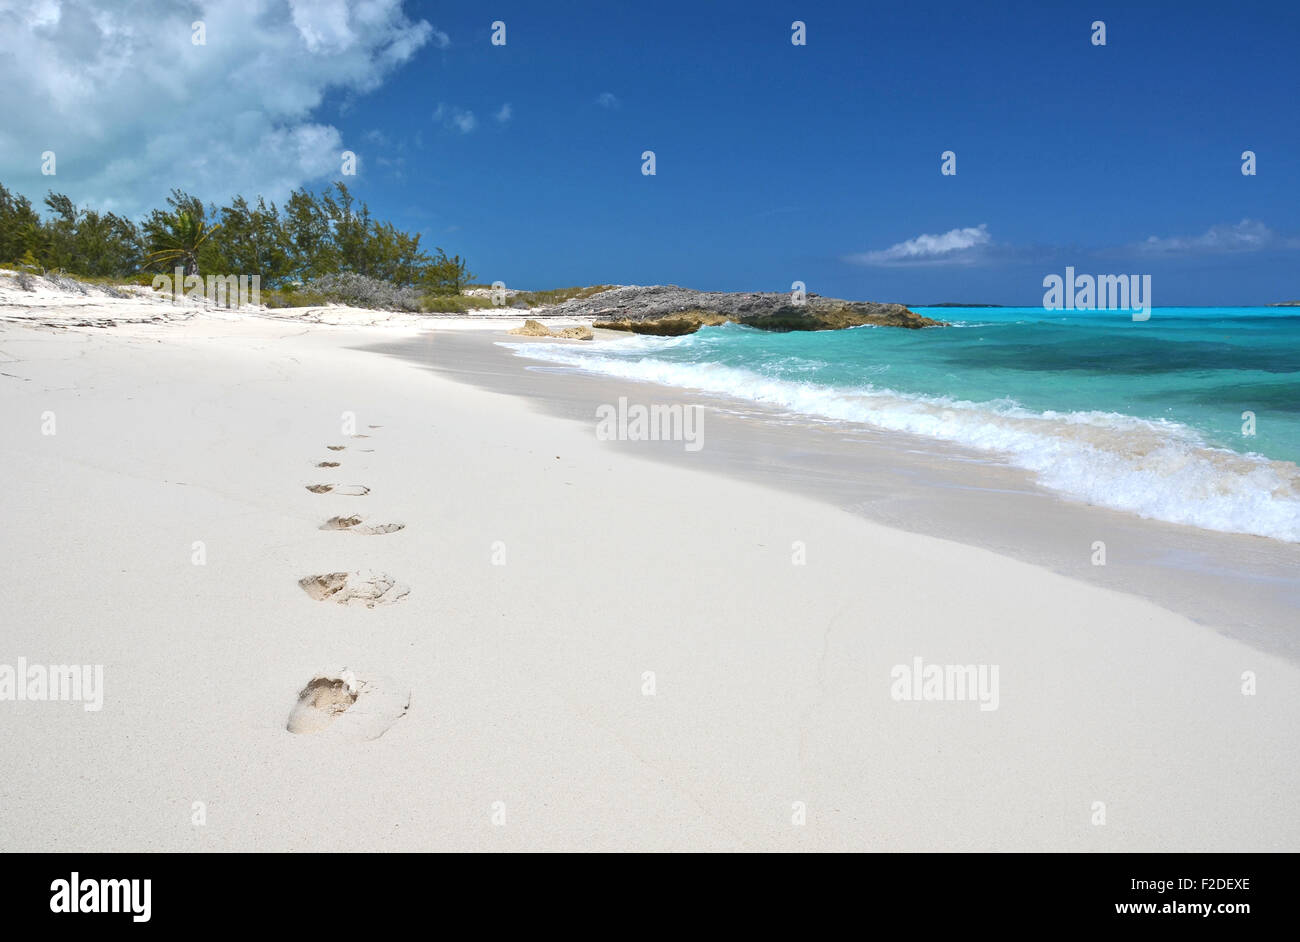 Footprints on the desrt beach of Little Exuma, Bahamas Stock Photo